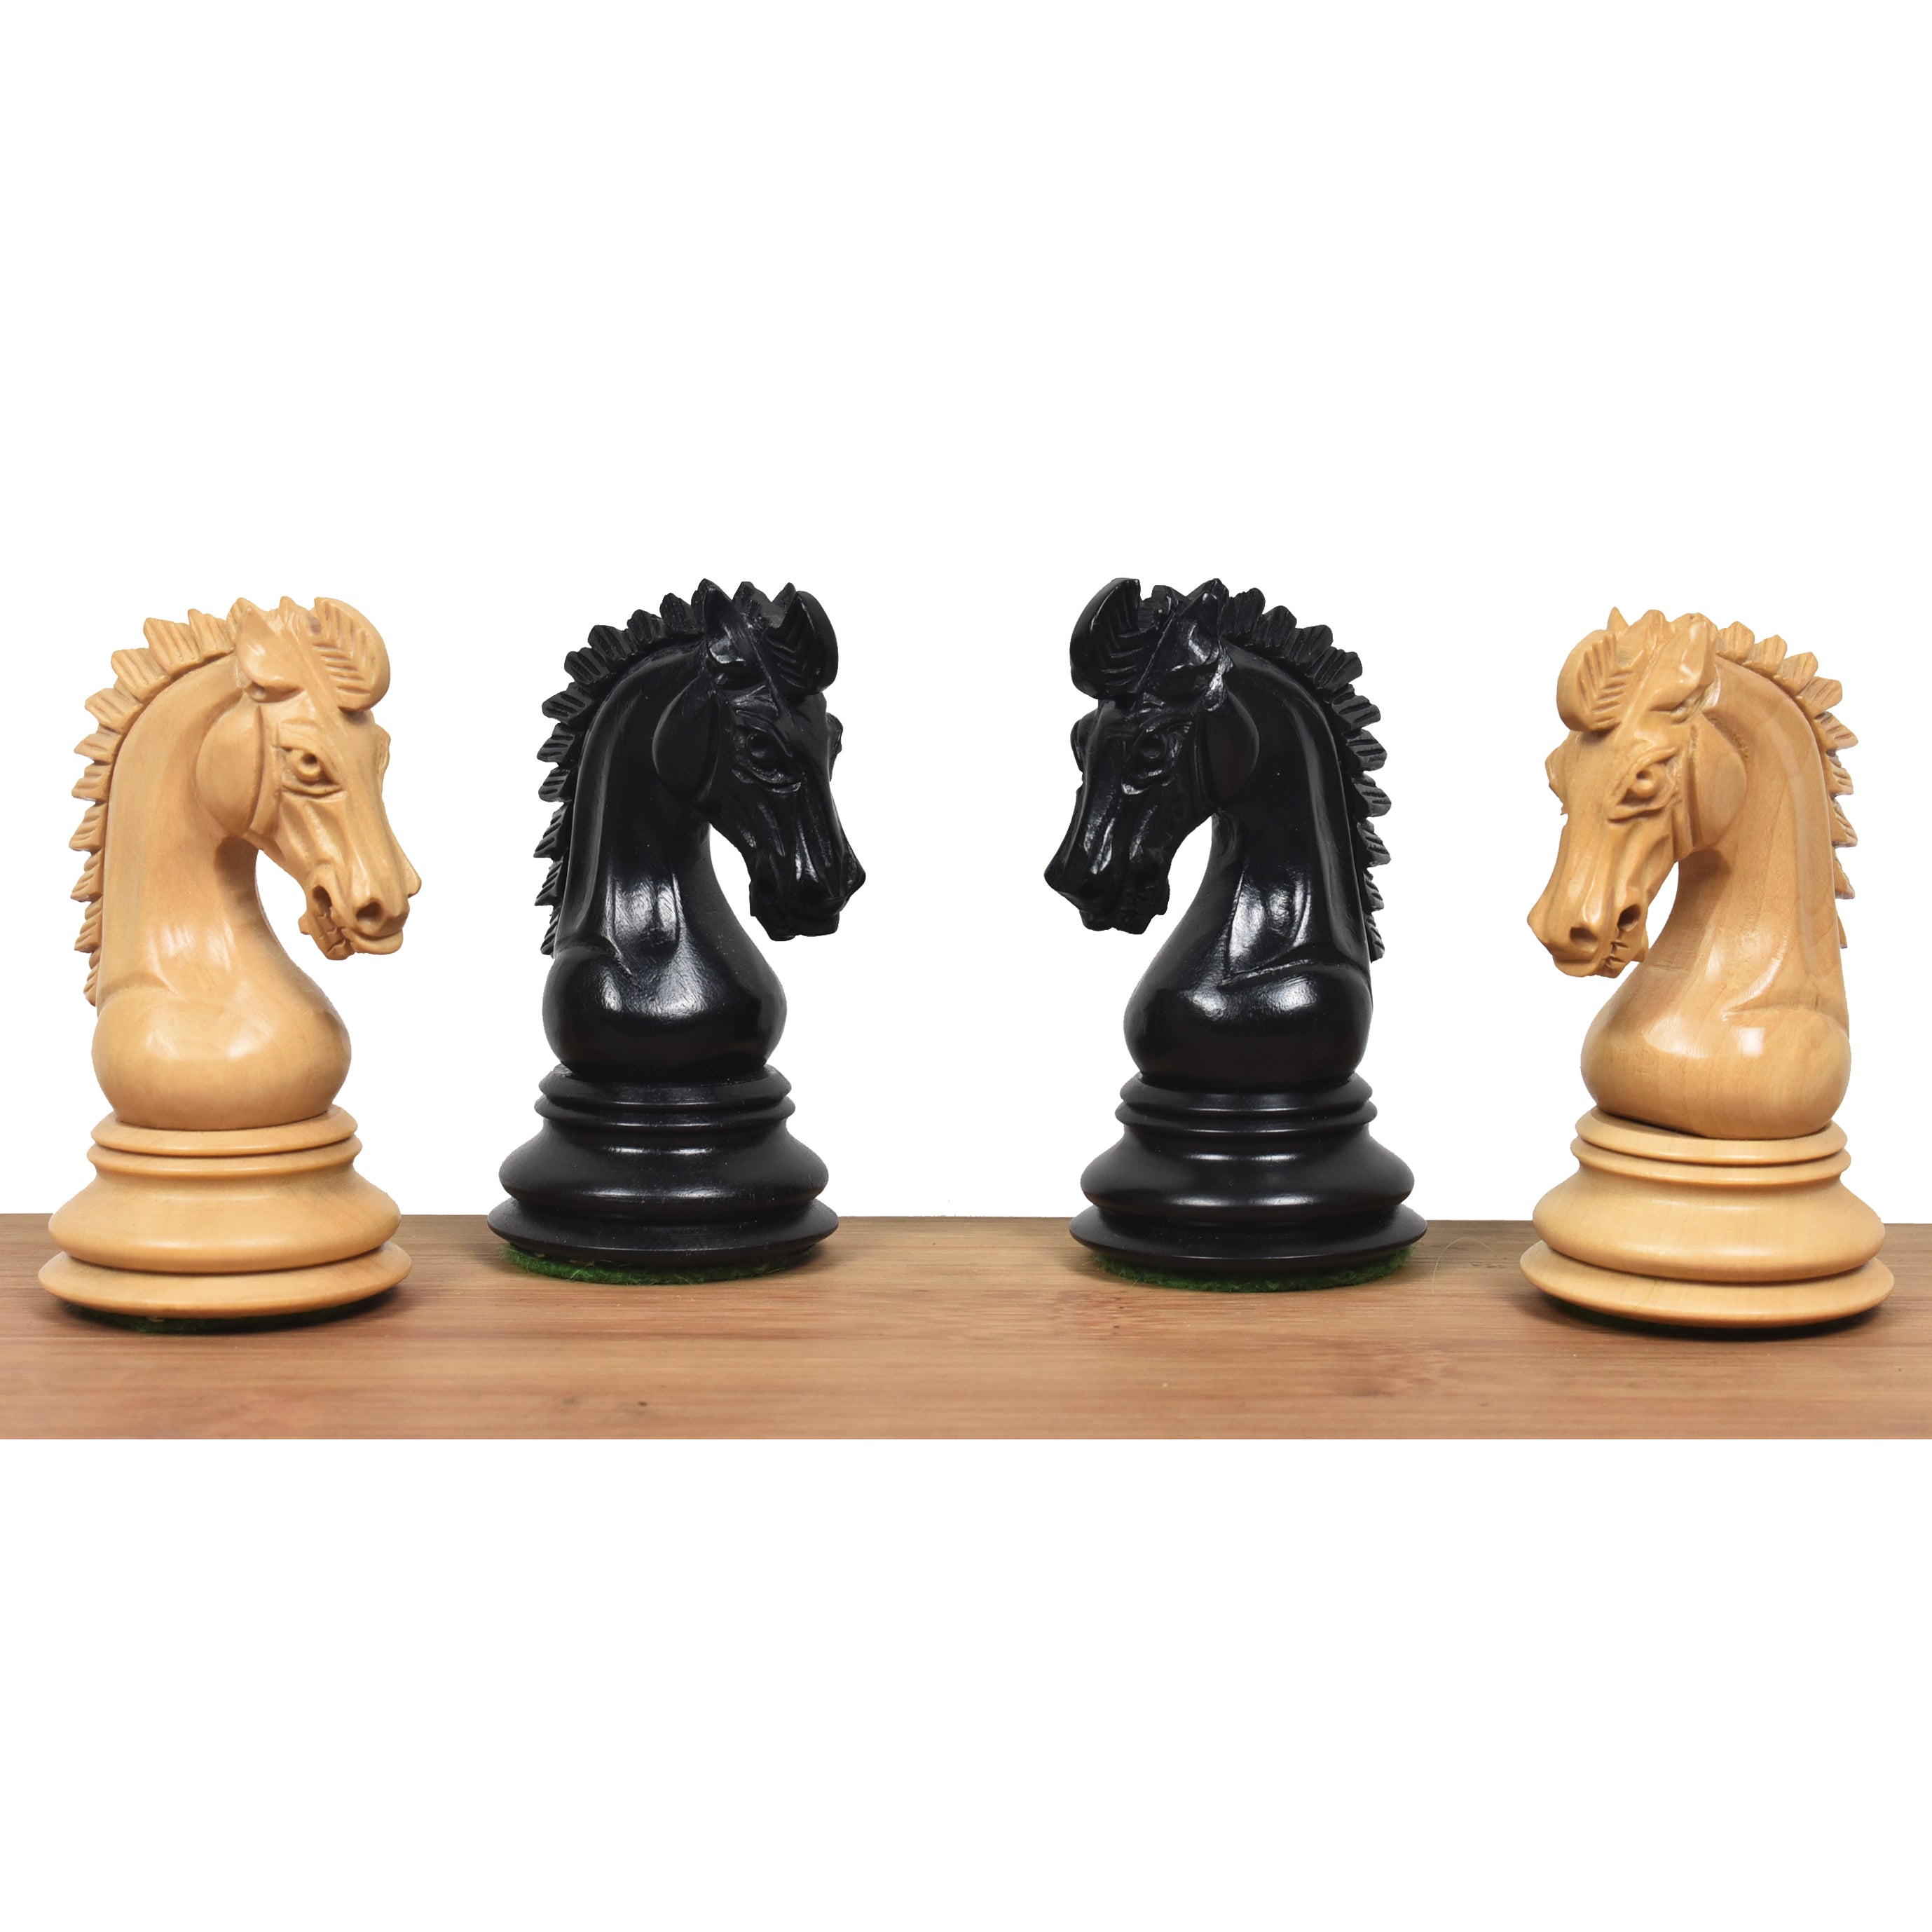 Emperor Series Staunton Chess Pieces Only set